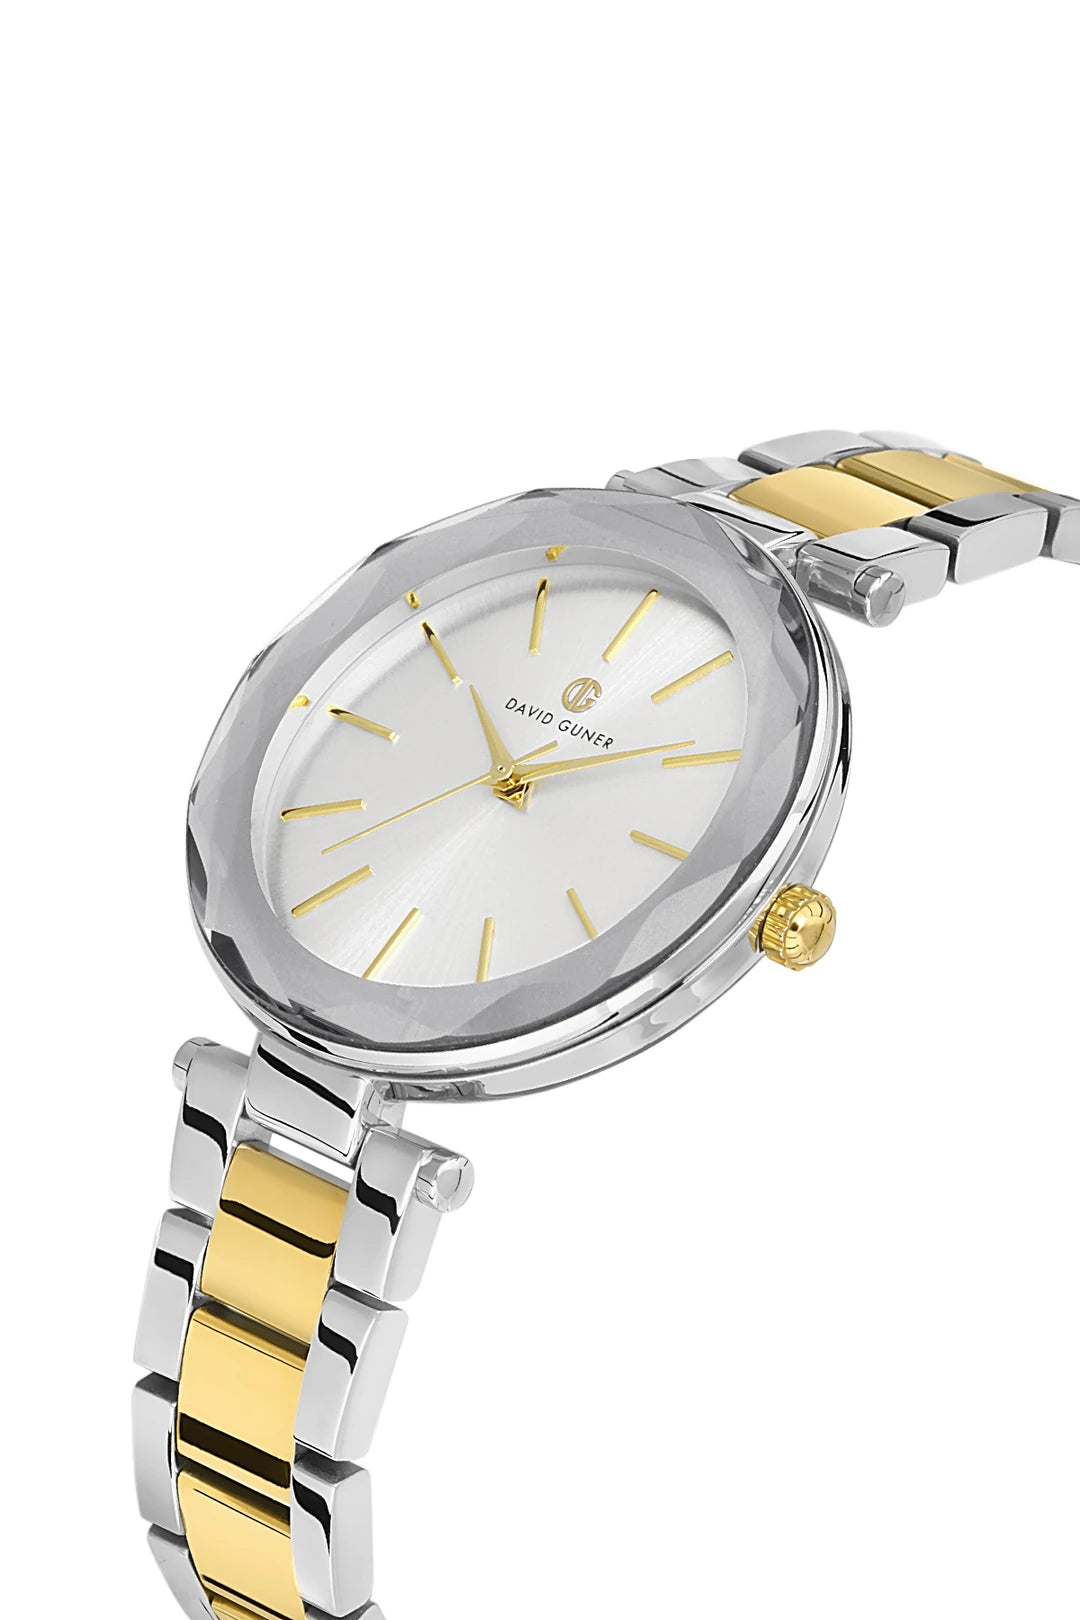 DAVID GUNER Yellow White Plated Silver Dial Women's Wristwatch